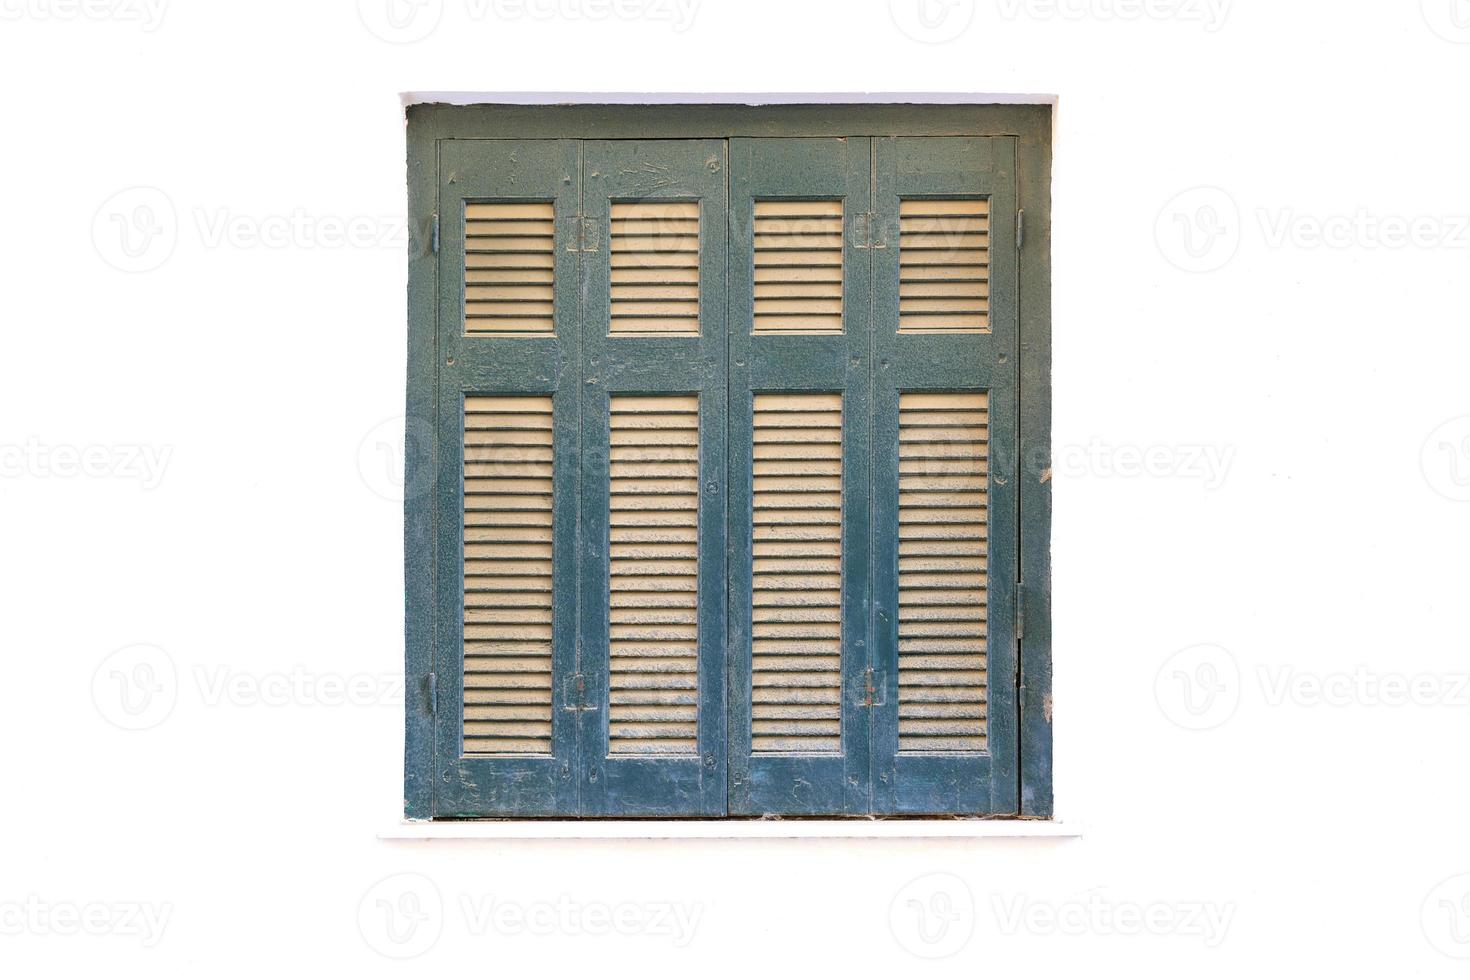 persianas de madeira na janela da antiga fachada branca da casa. foto